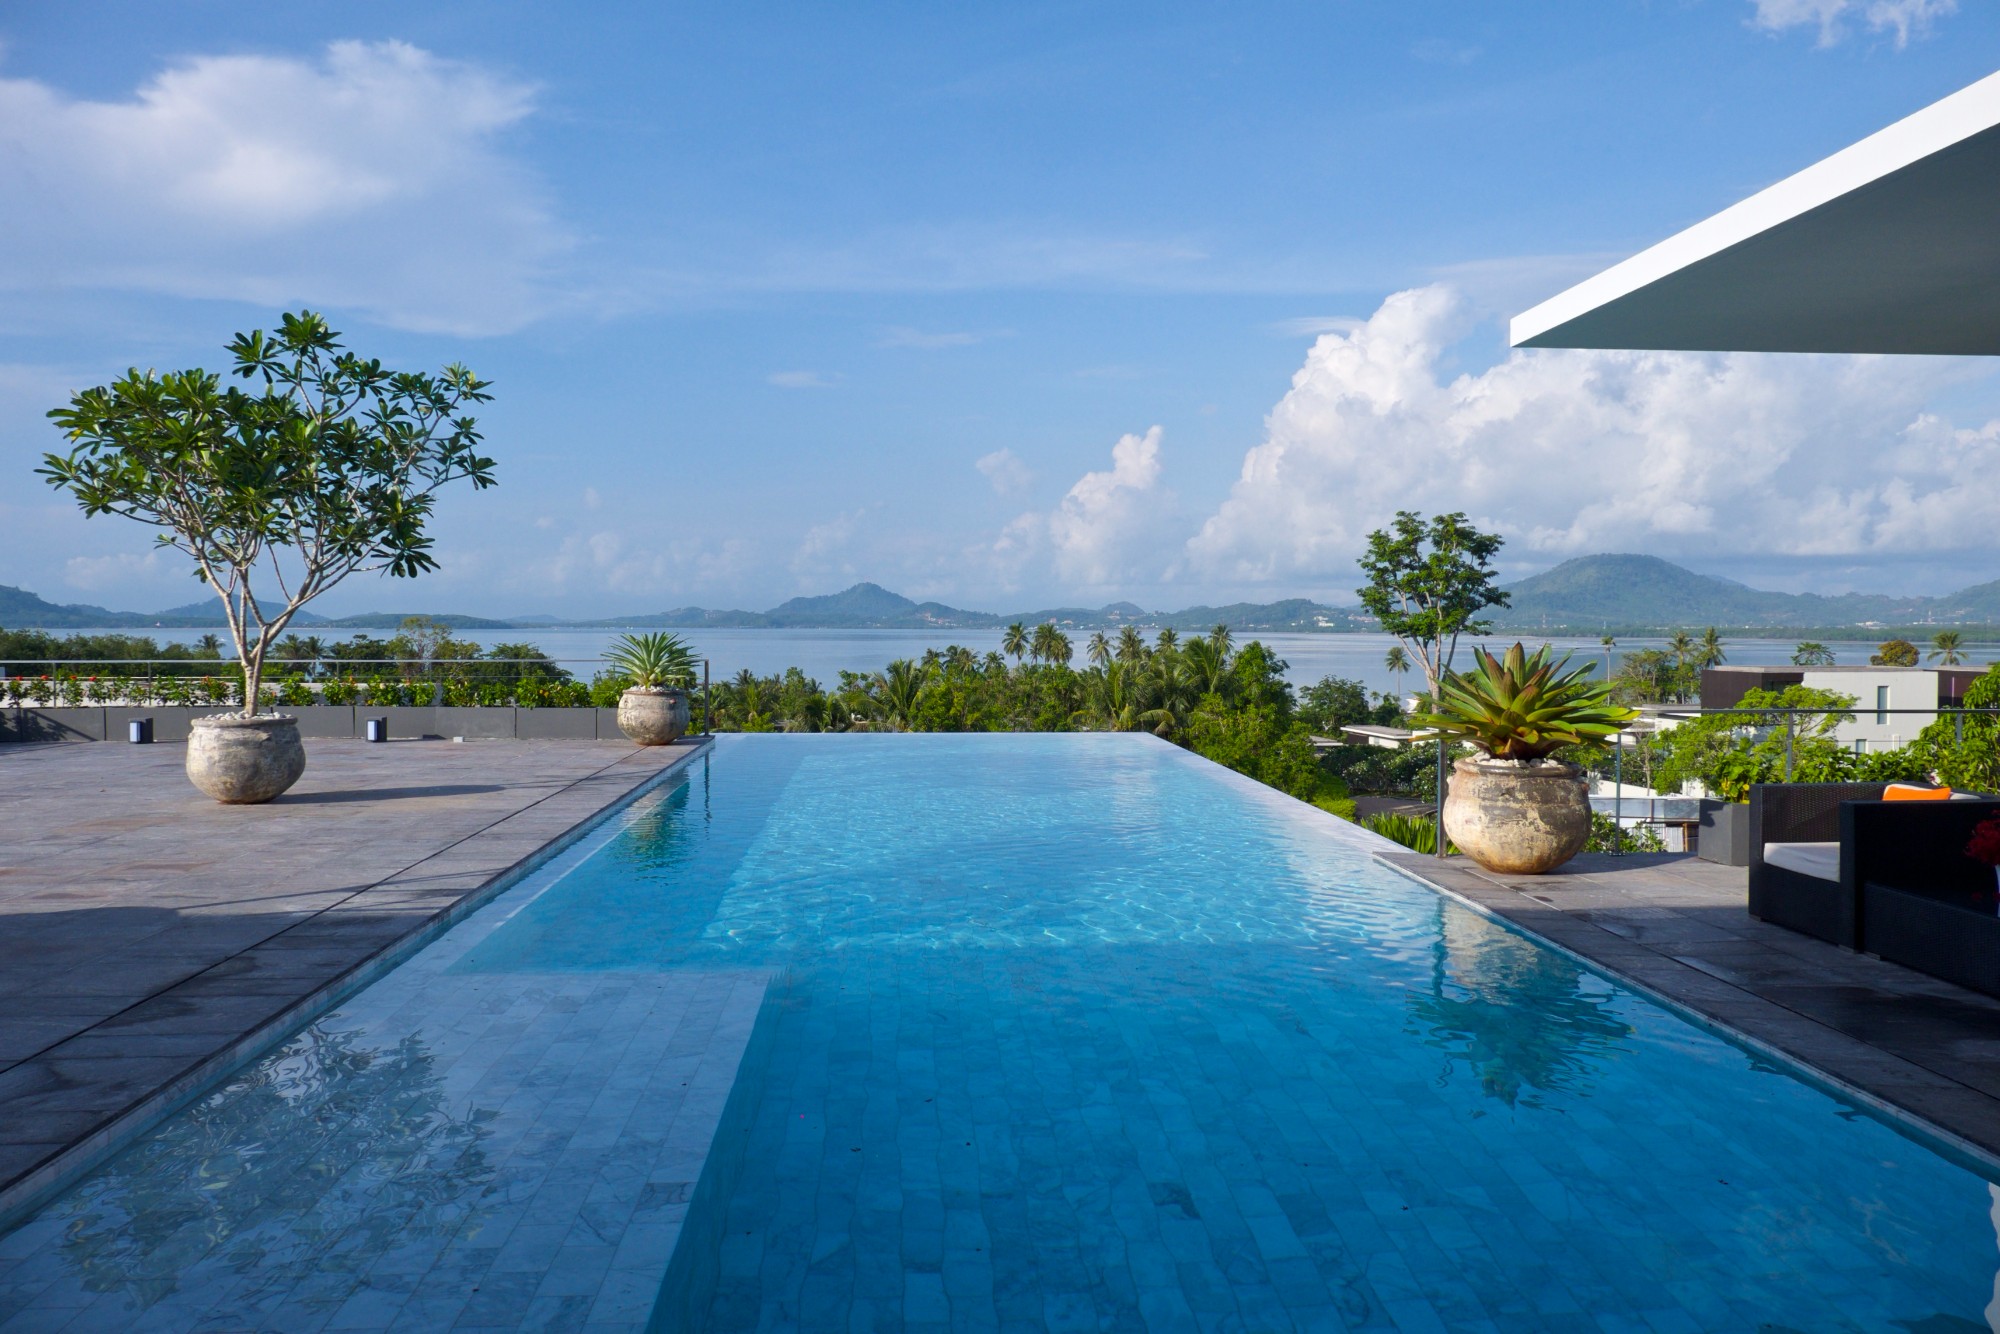 4/5 Bedroom New Modern Pool Villa in Cape Yamu Phuket